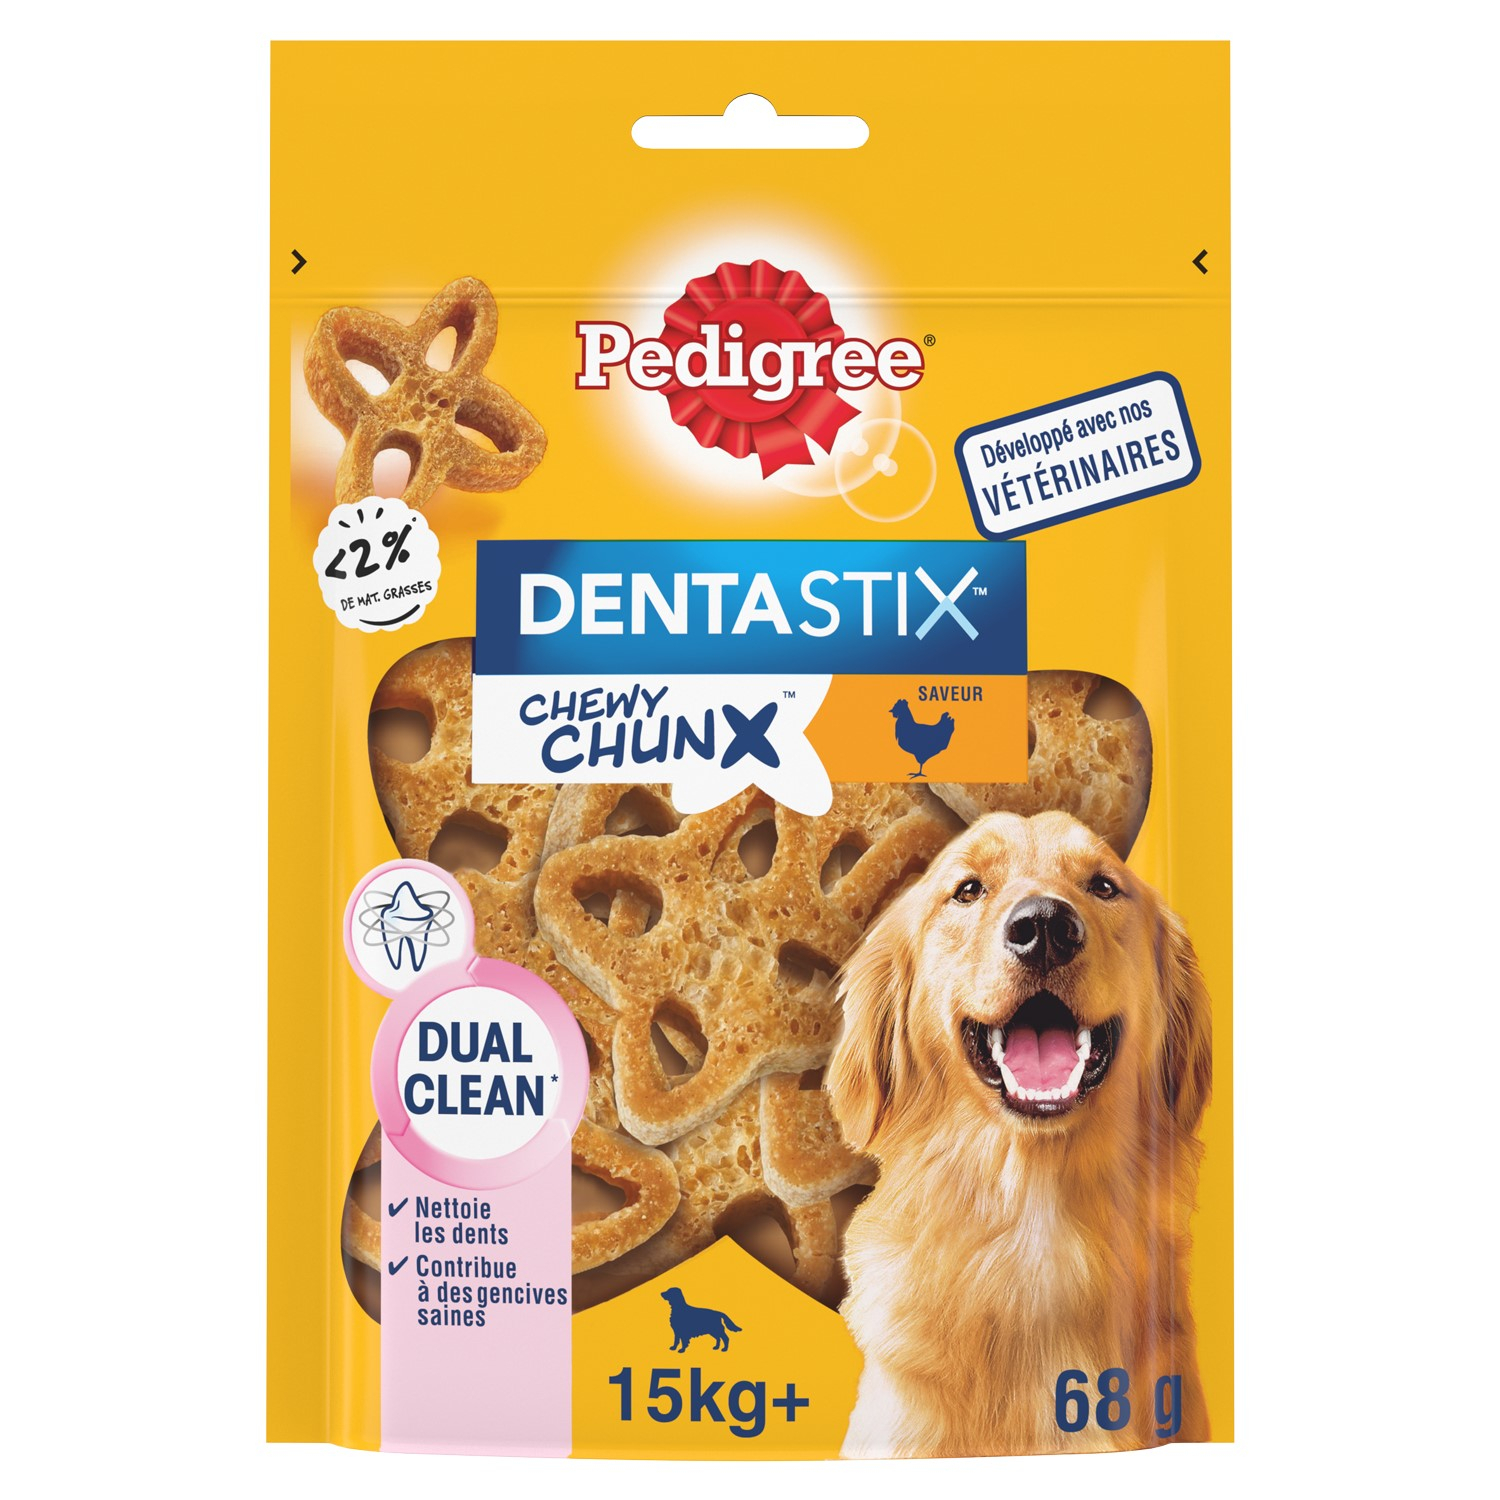 PEDIGREE DENTASTIX CHEWY CHUNX, honden > 15 kg